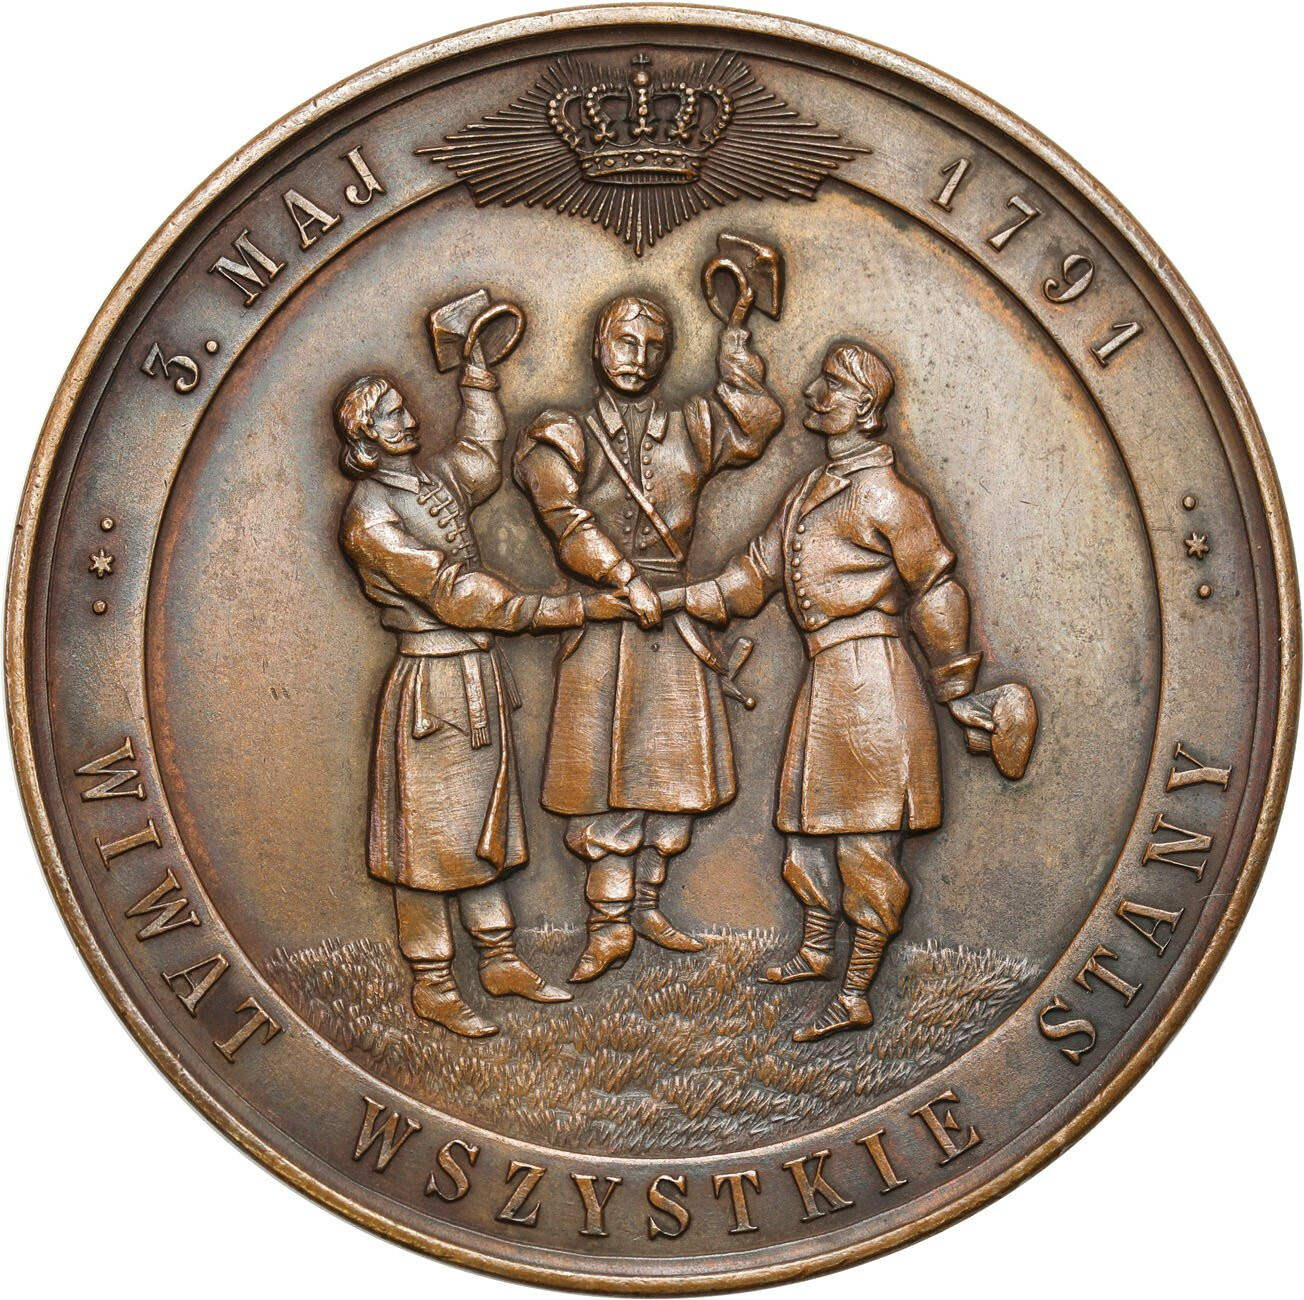  Polska pod zaborami. Medal na 100-lecie Konstytucji 3 Maja 1891 - PIĘKNY